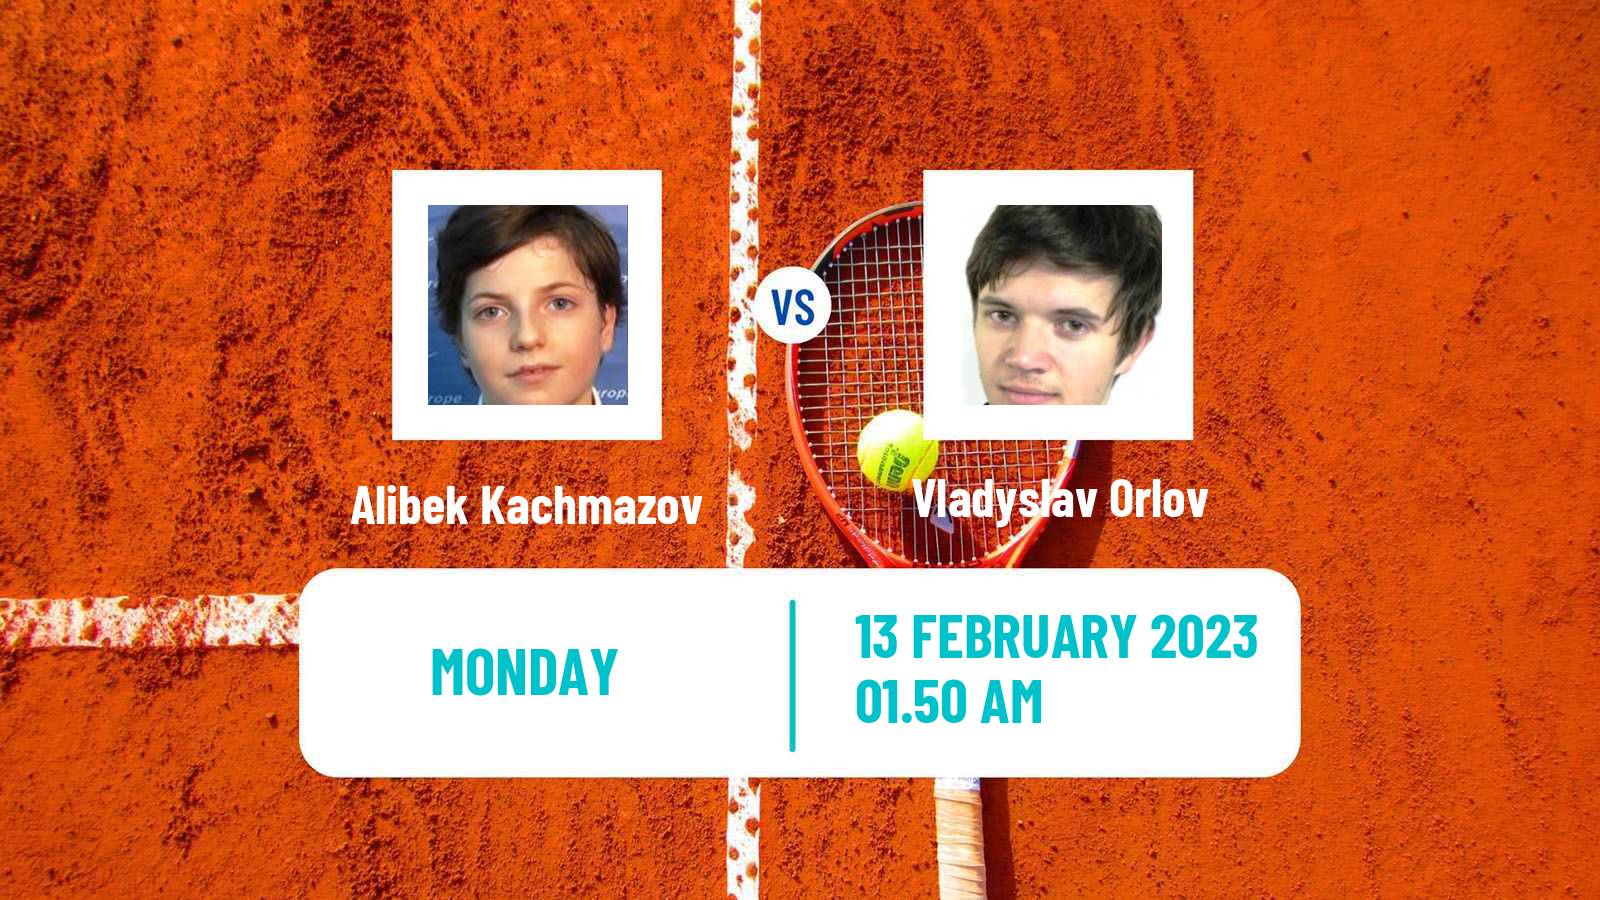 Tennis ATP Challenger Alibek Kachmazov - Vladyslav Orlov